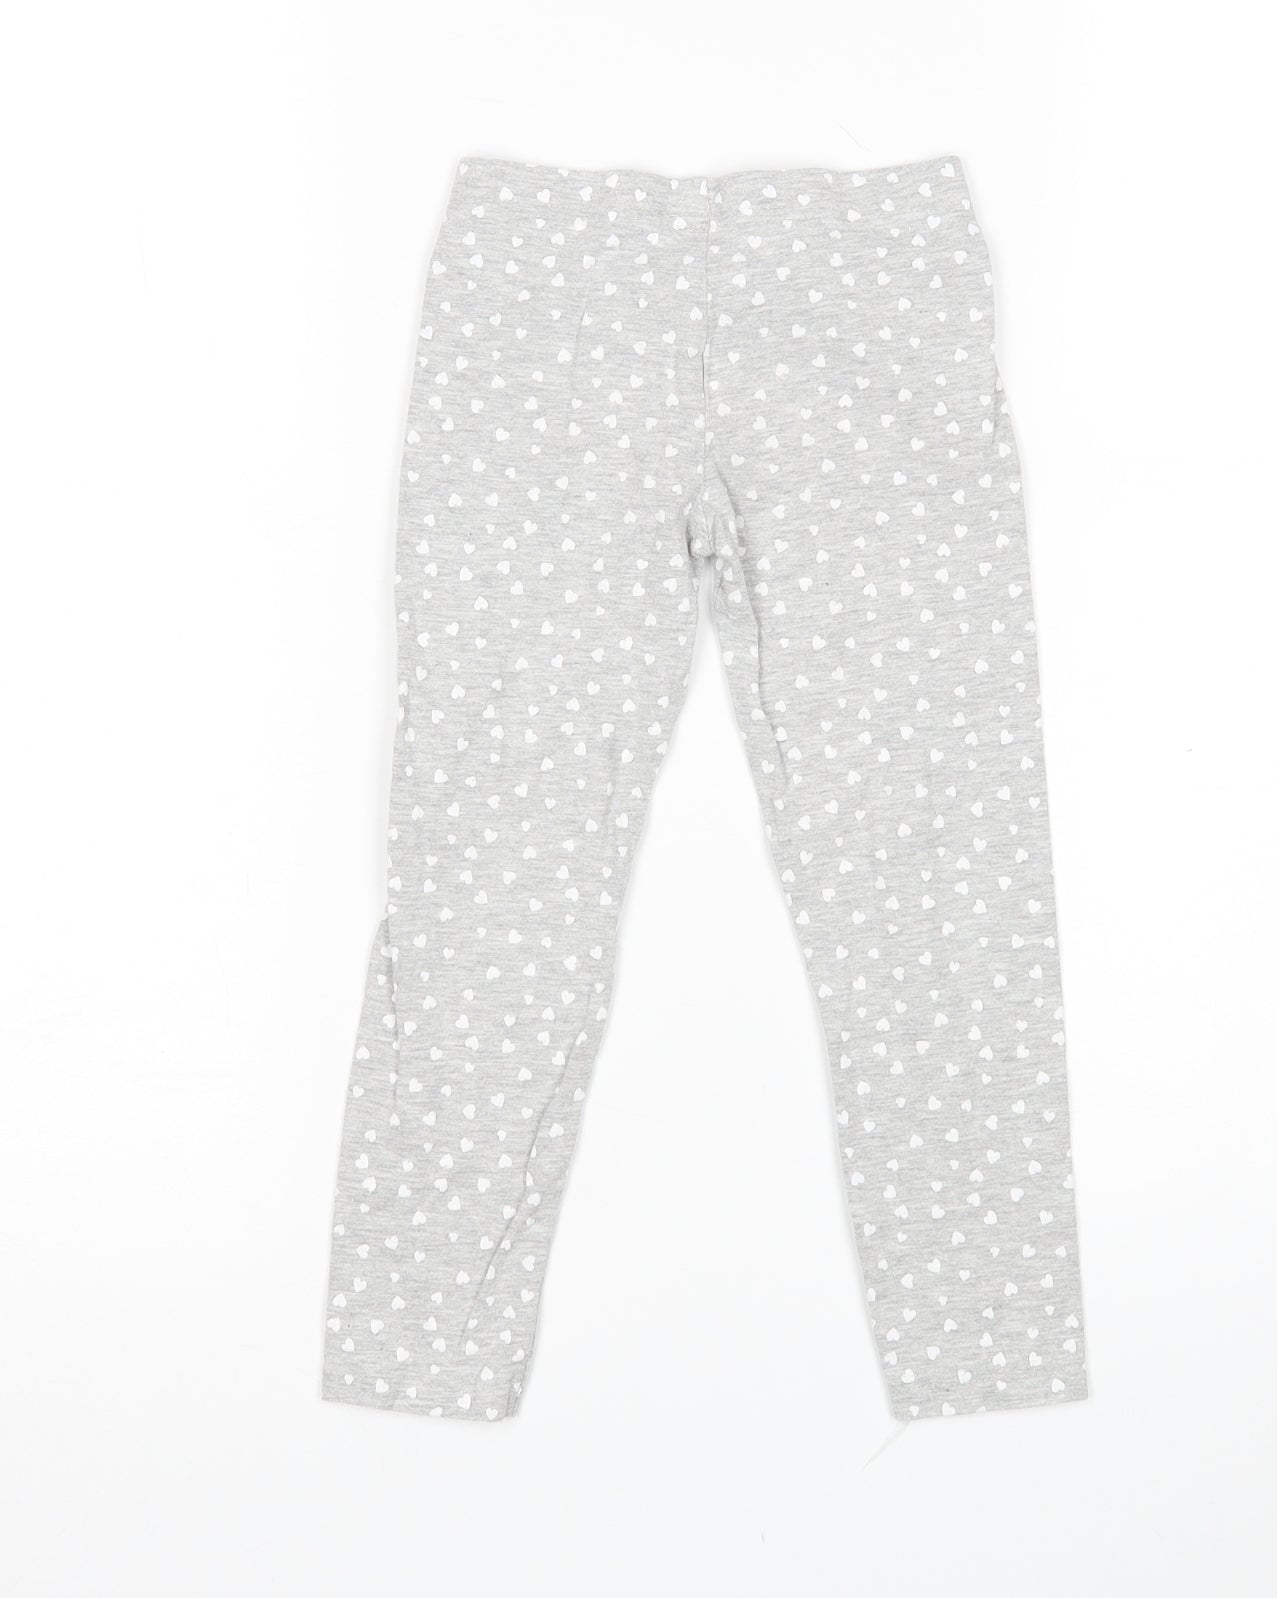 Primark Girls Grey Polka Dot   Pyjama Pants Size 5-6 Years